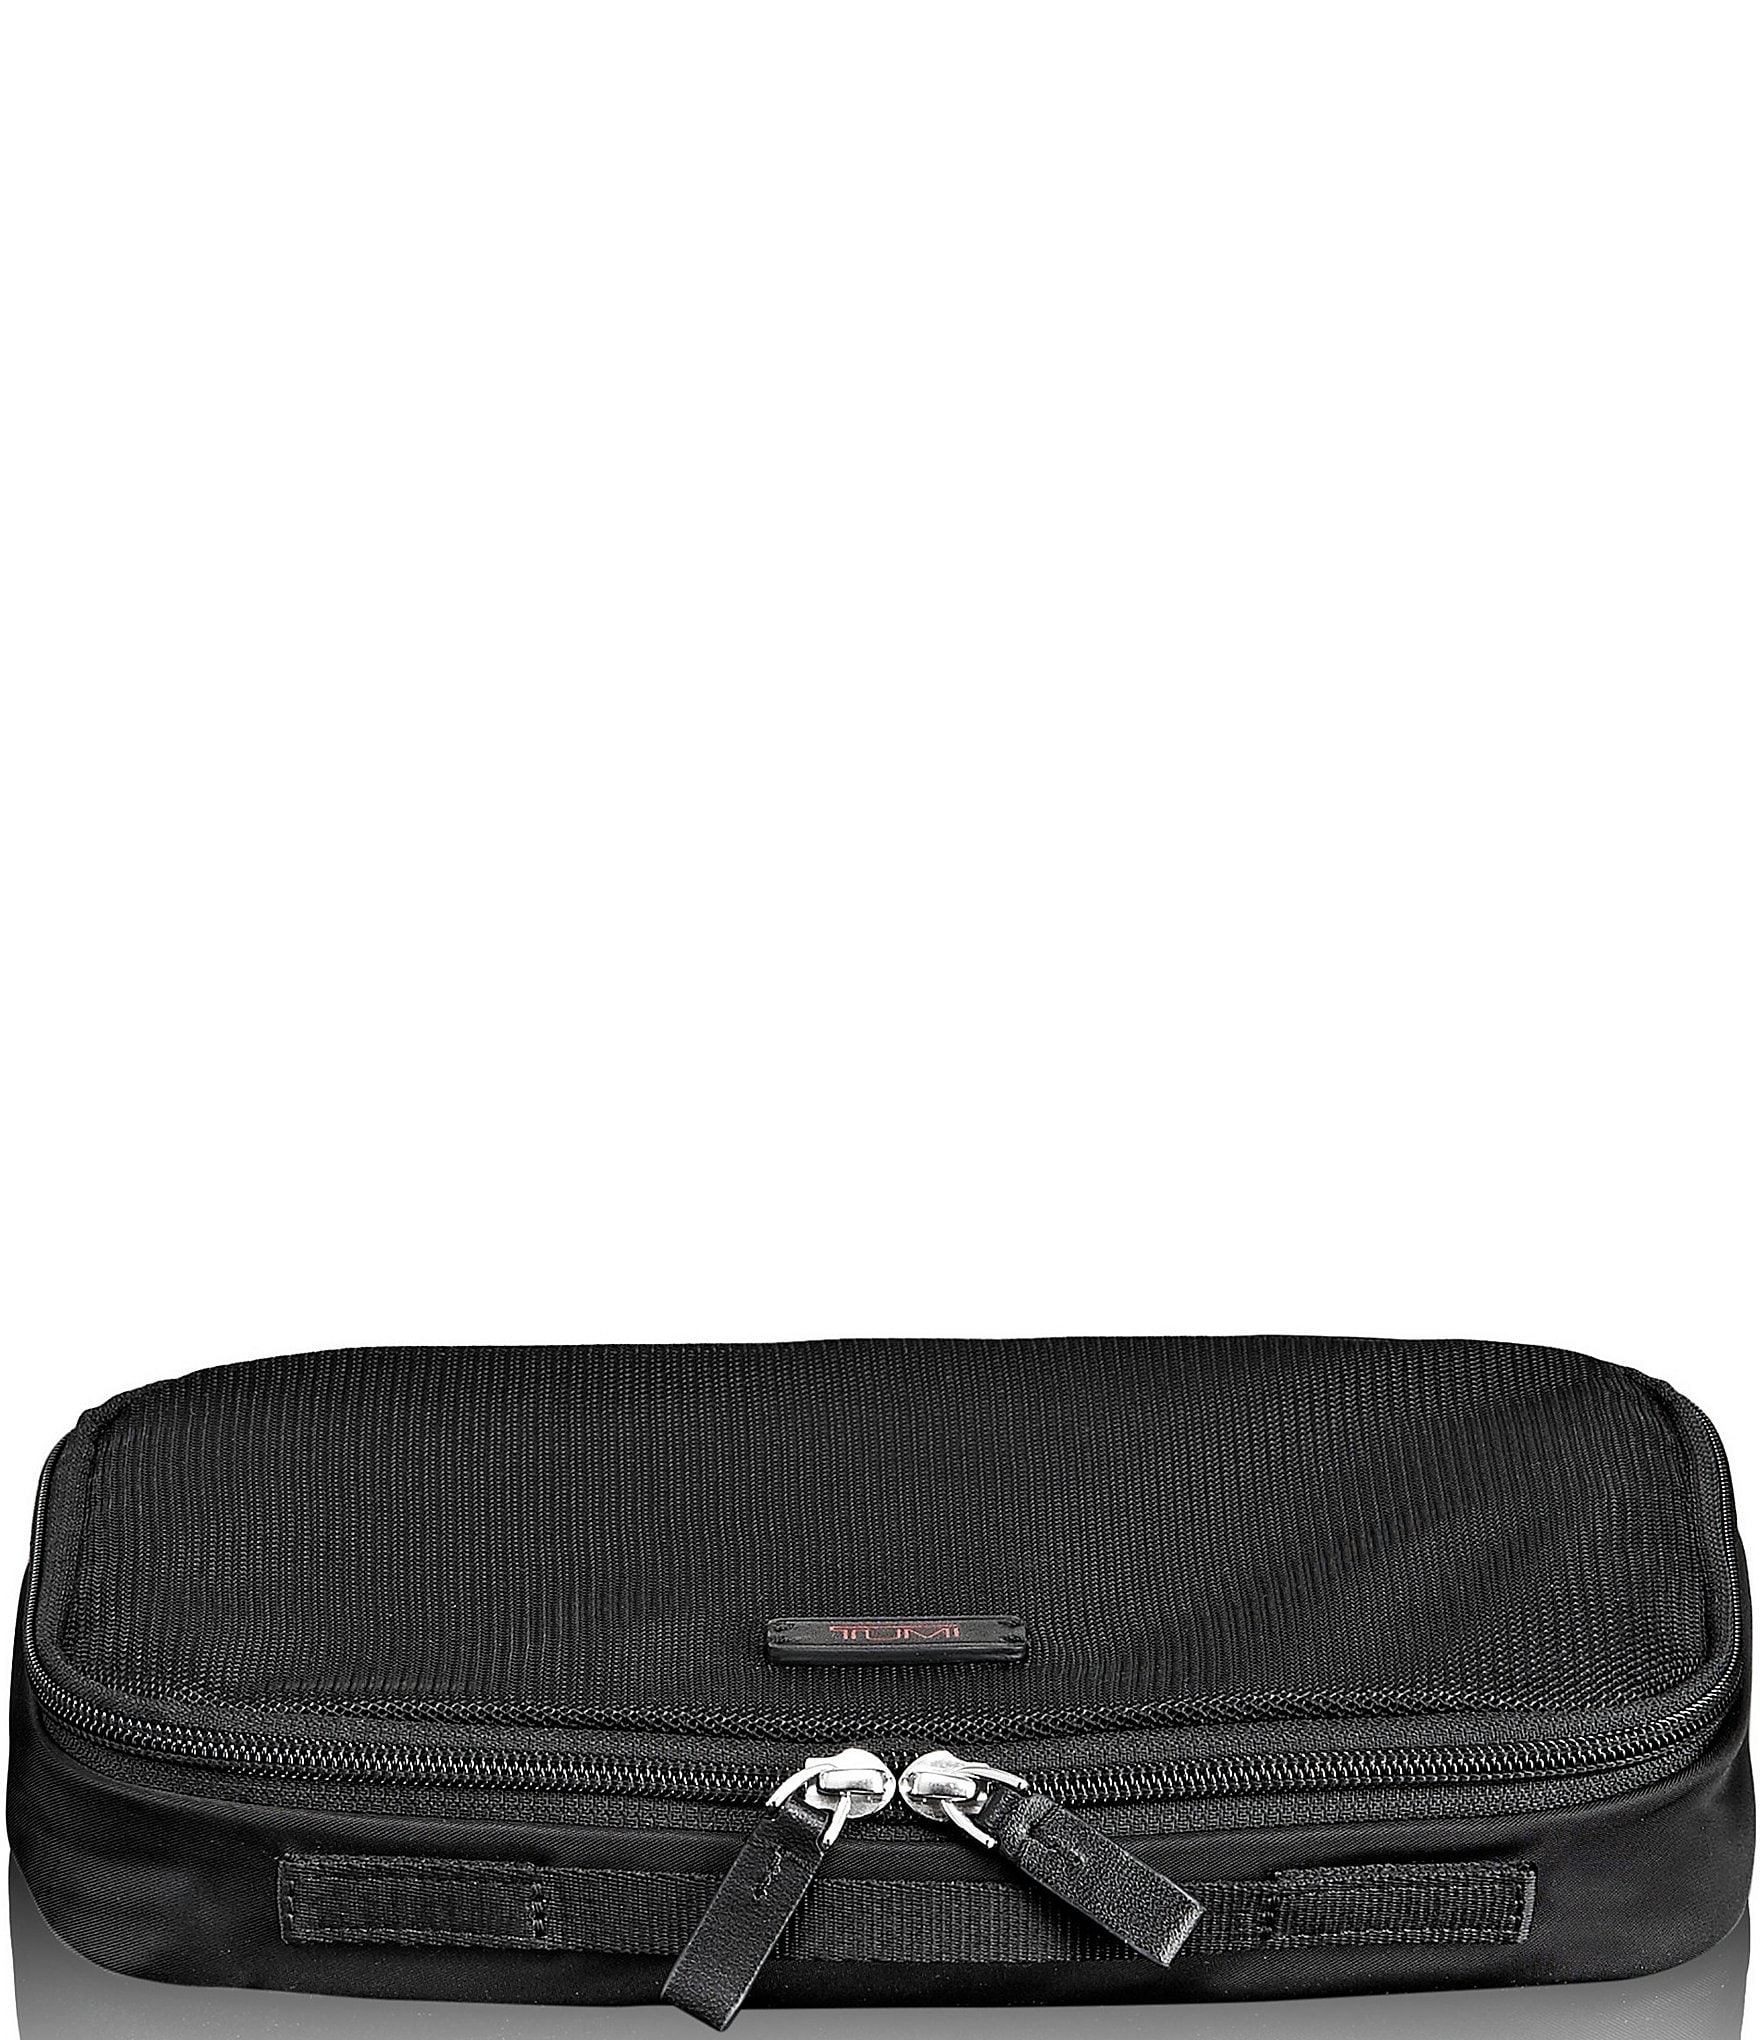 Samsonite Supra 6 Carry On Tri-Fold Garment Bag Black | Luggage sale, Bags,  Travel luggage